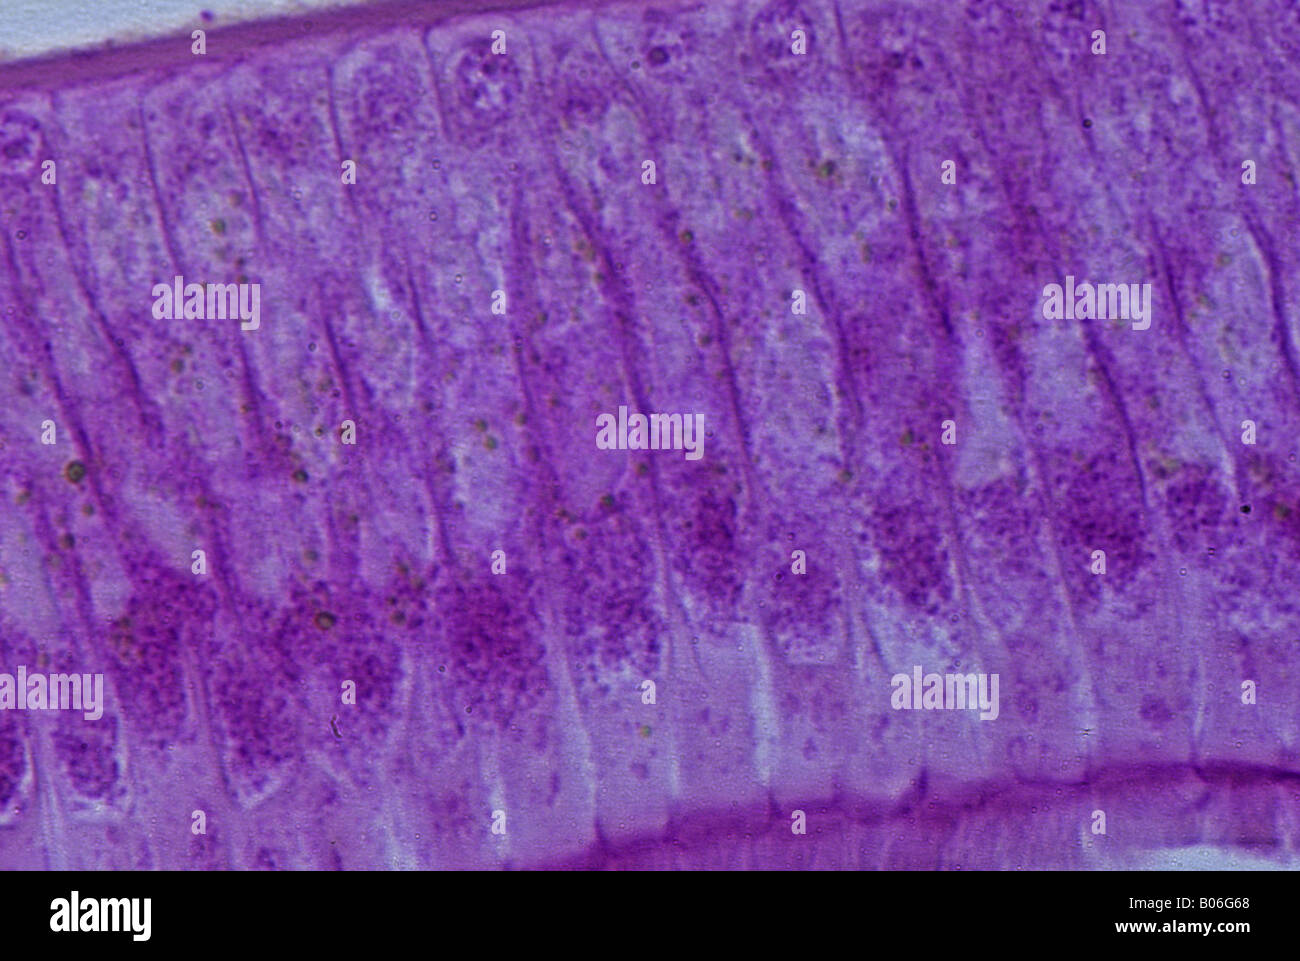 Epithelial cells of intestine of Ascaris 230x Stock Photo